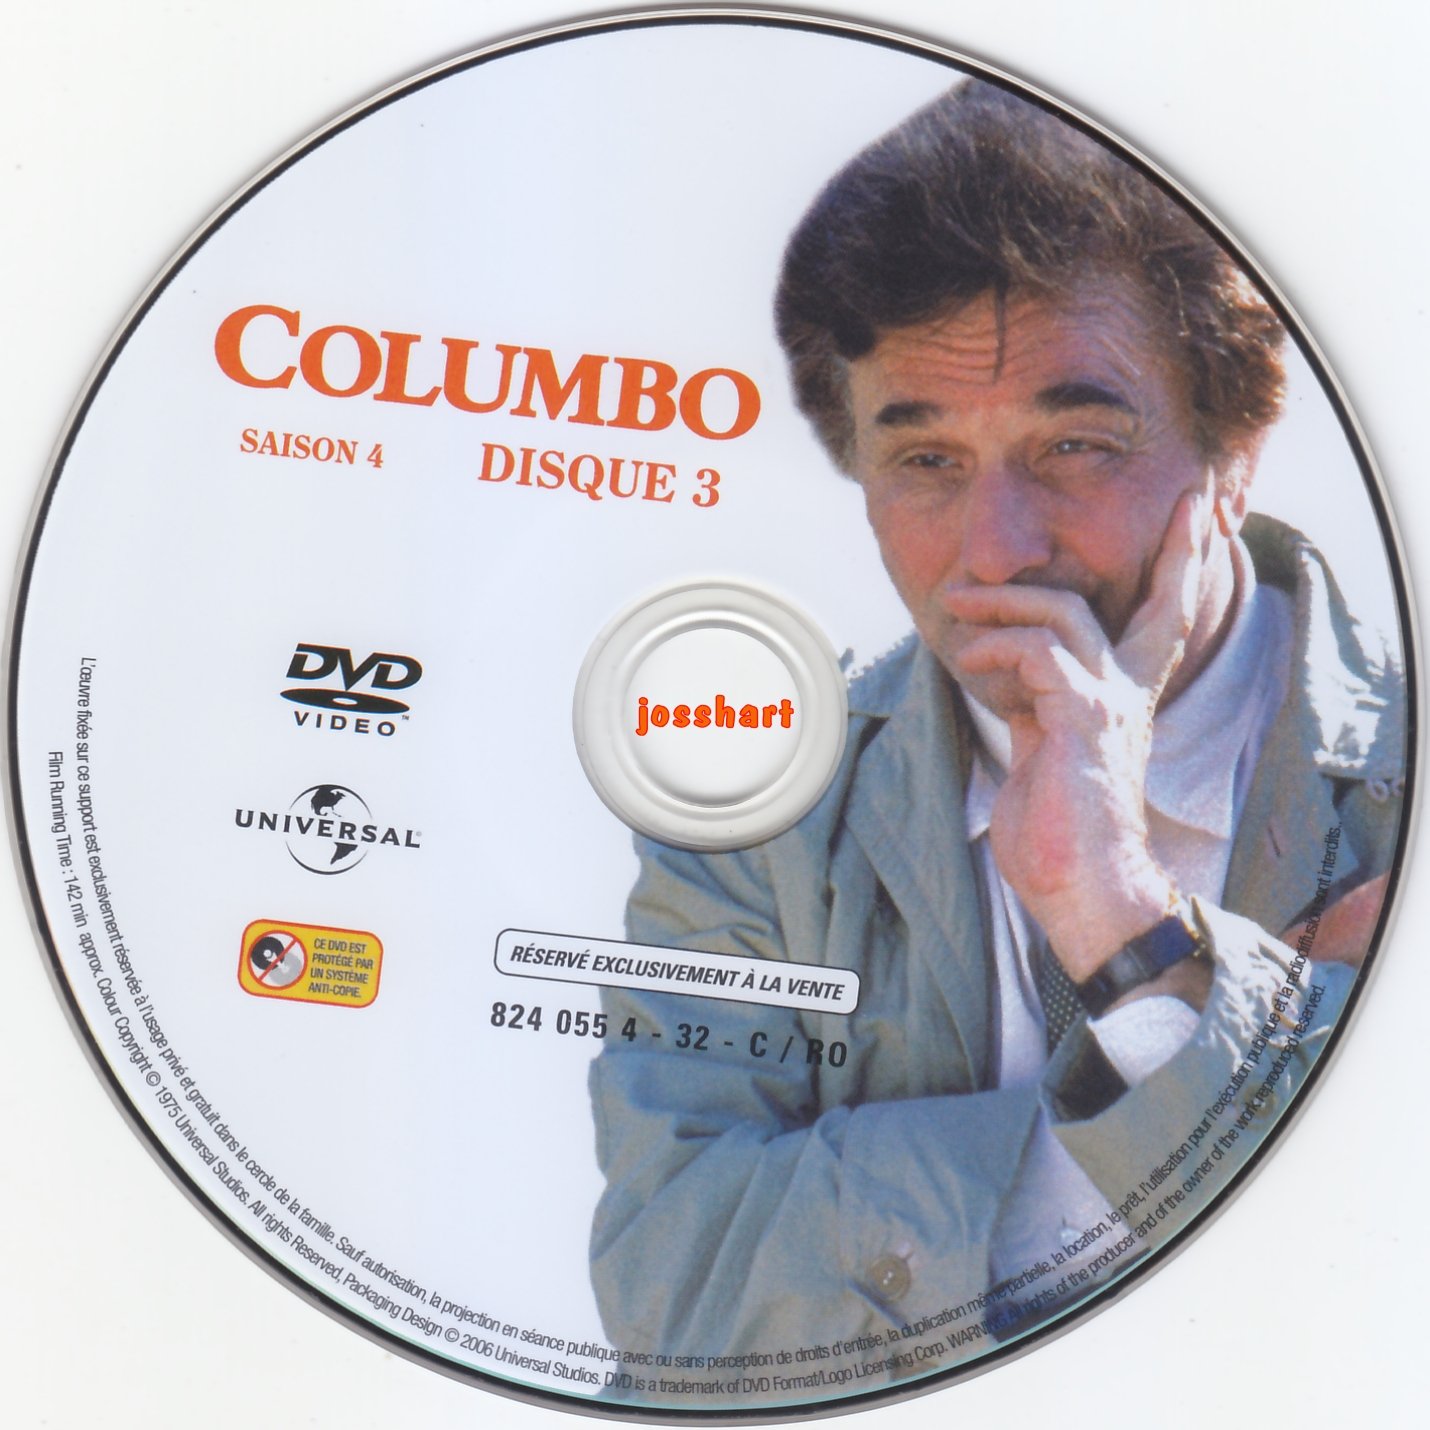 Columbo S4 DISC3